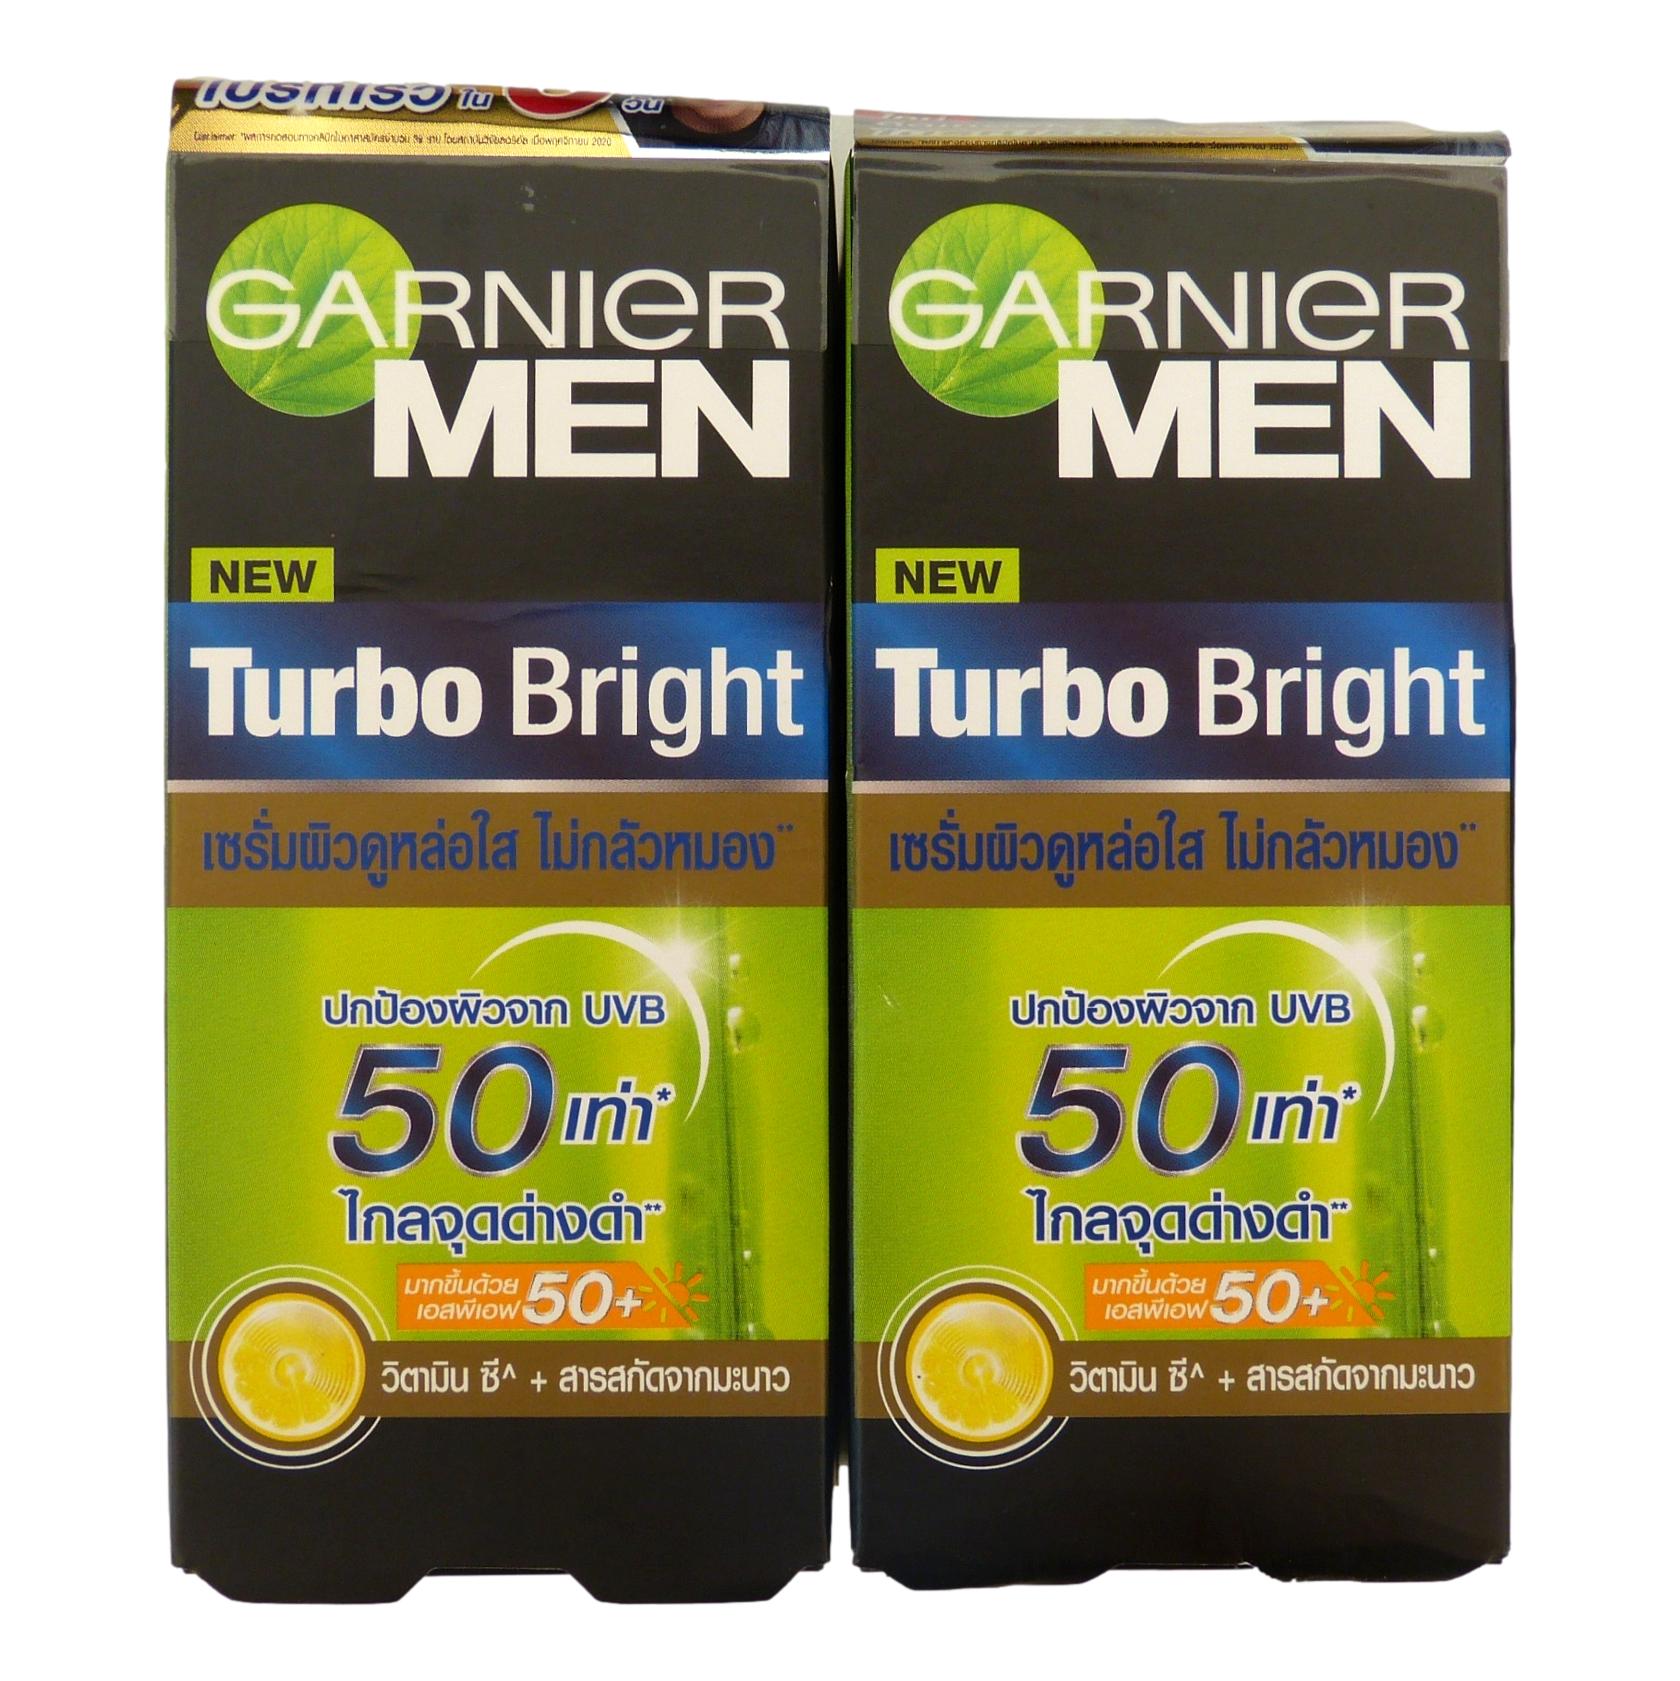 Garnier Men Turbo Bright Oil Control Spotless Serum SPF50 Pack of 2